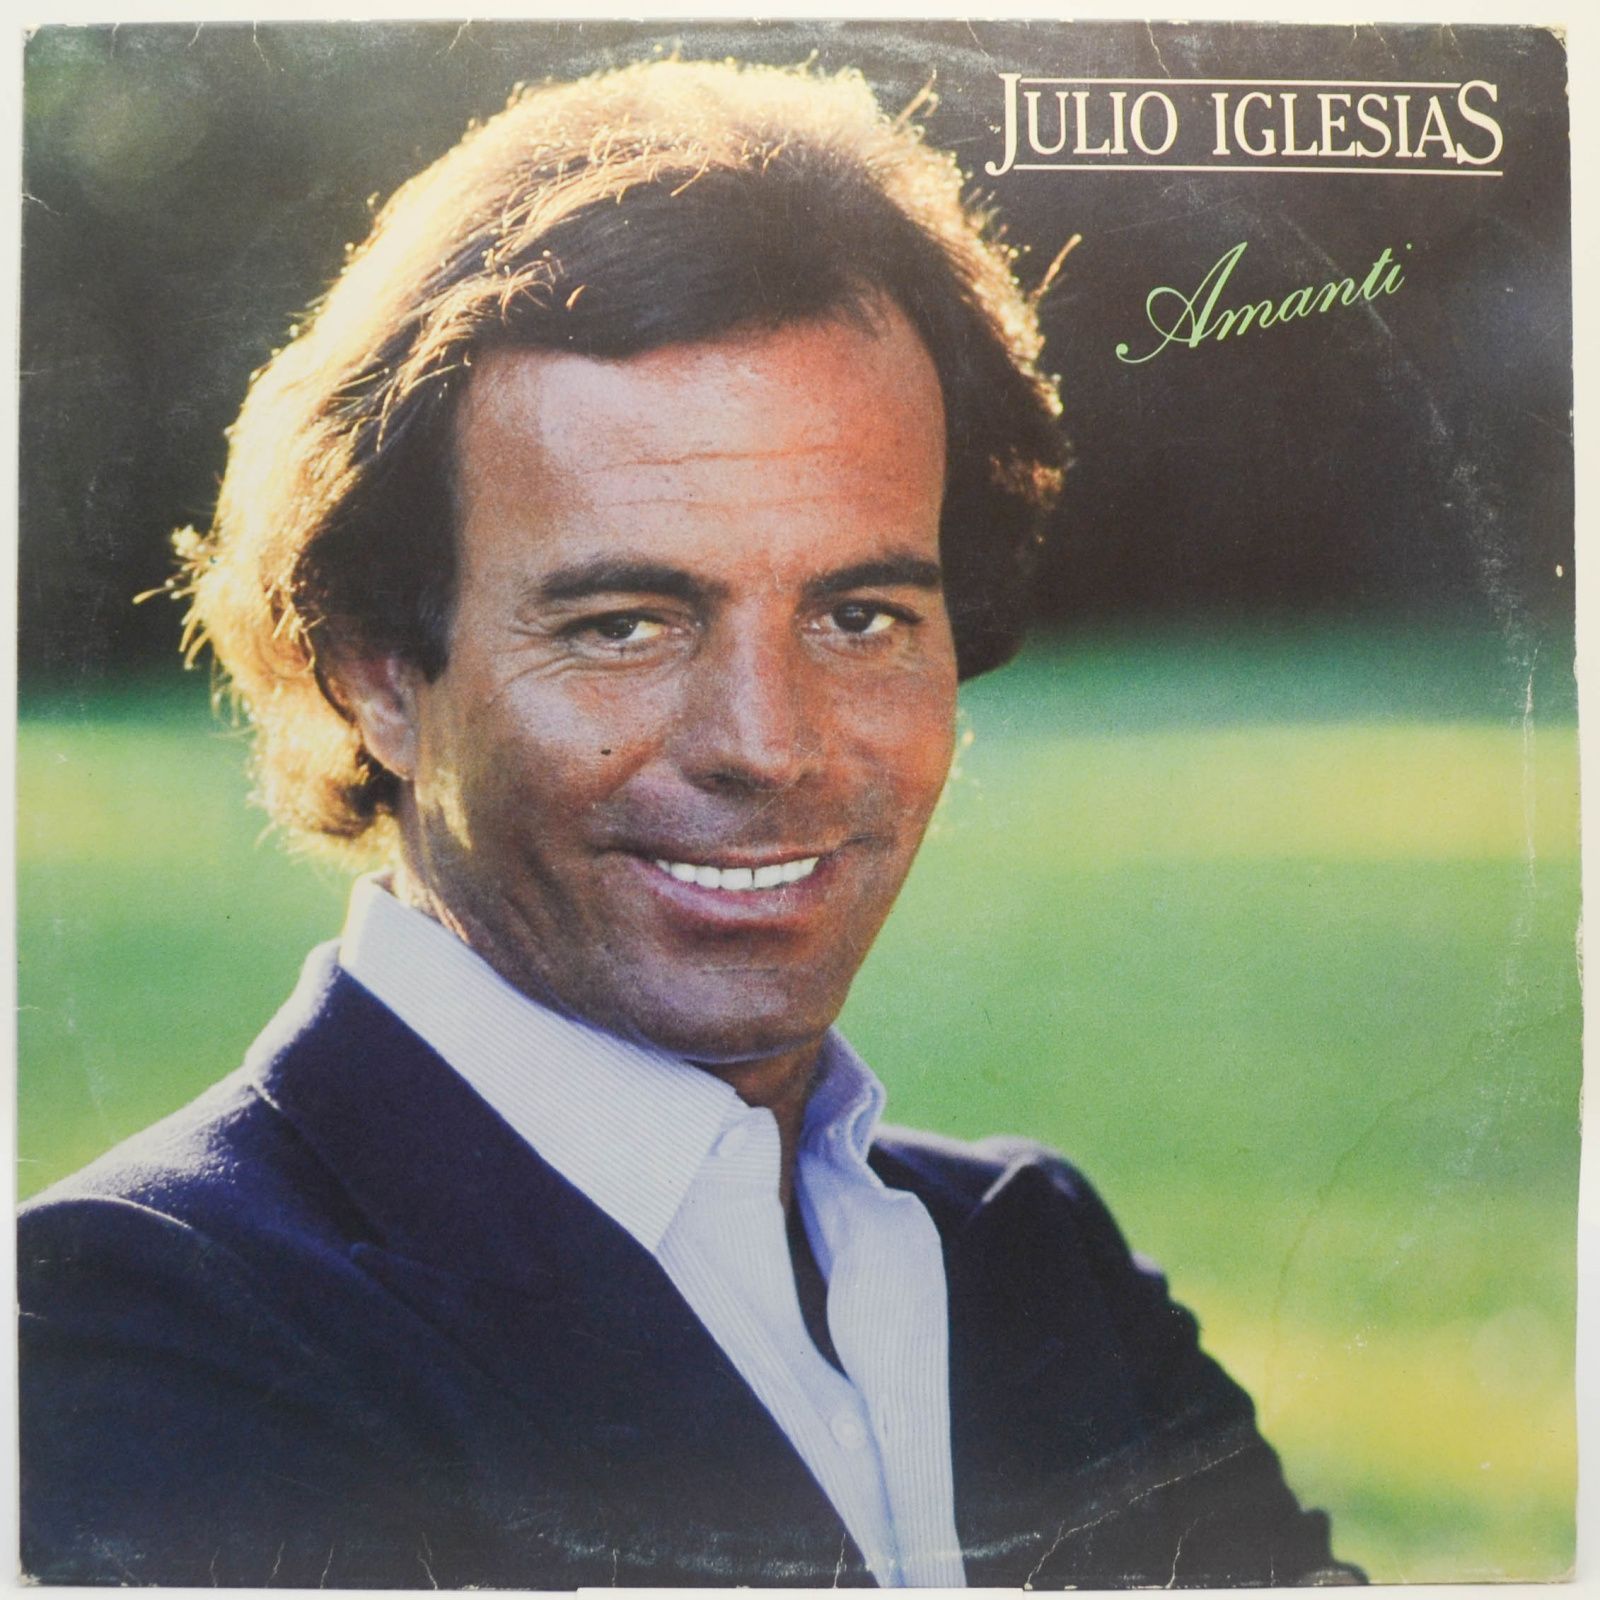 Julio Iglesias — Amanti, 1981